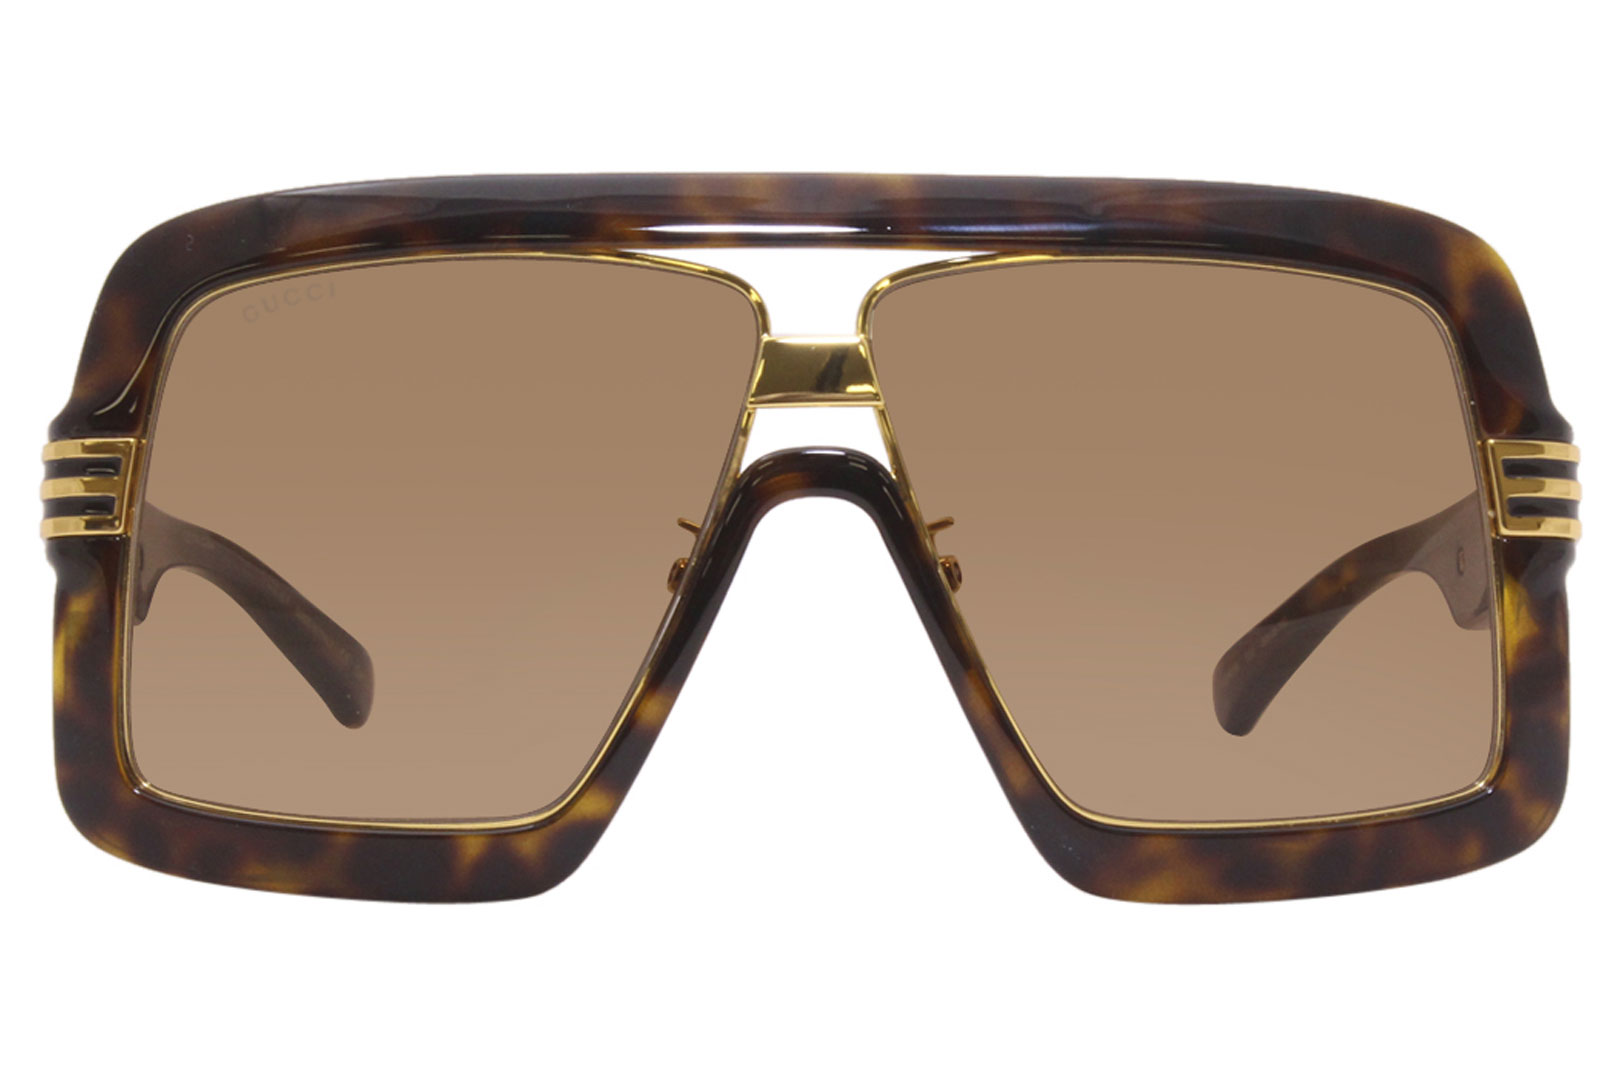 Ombord brochure kaskade Gucci Sunglasses GG0900S 002 Havana-Brown 60-14-145mm | EyeSpecs.com